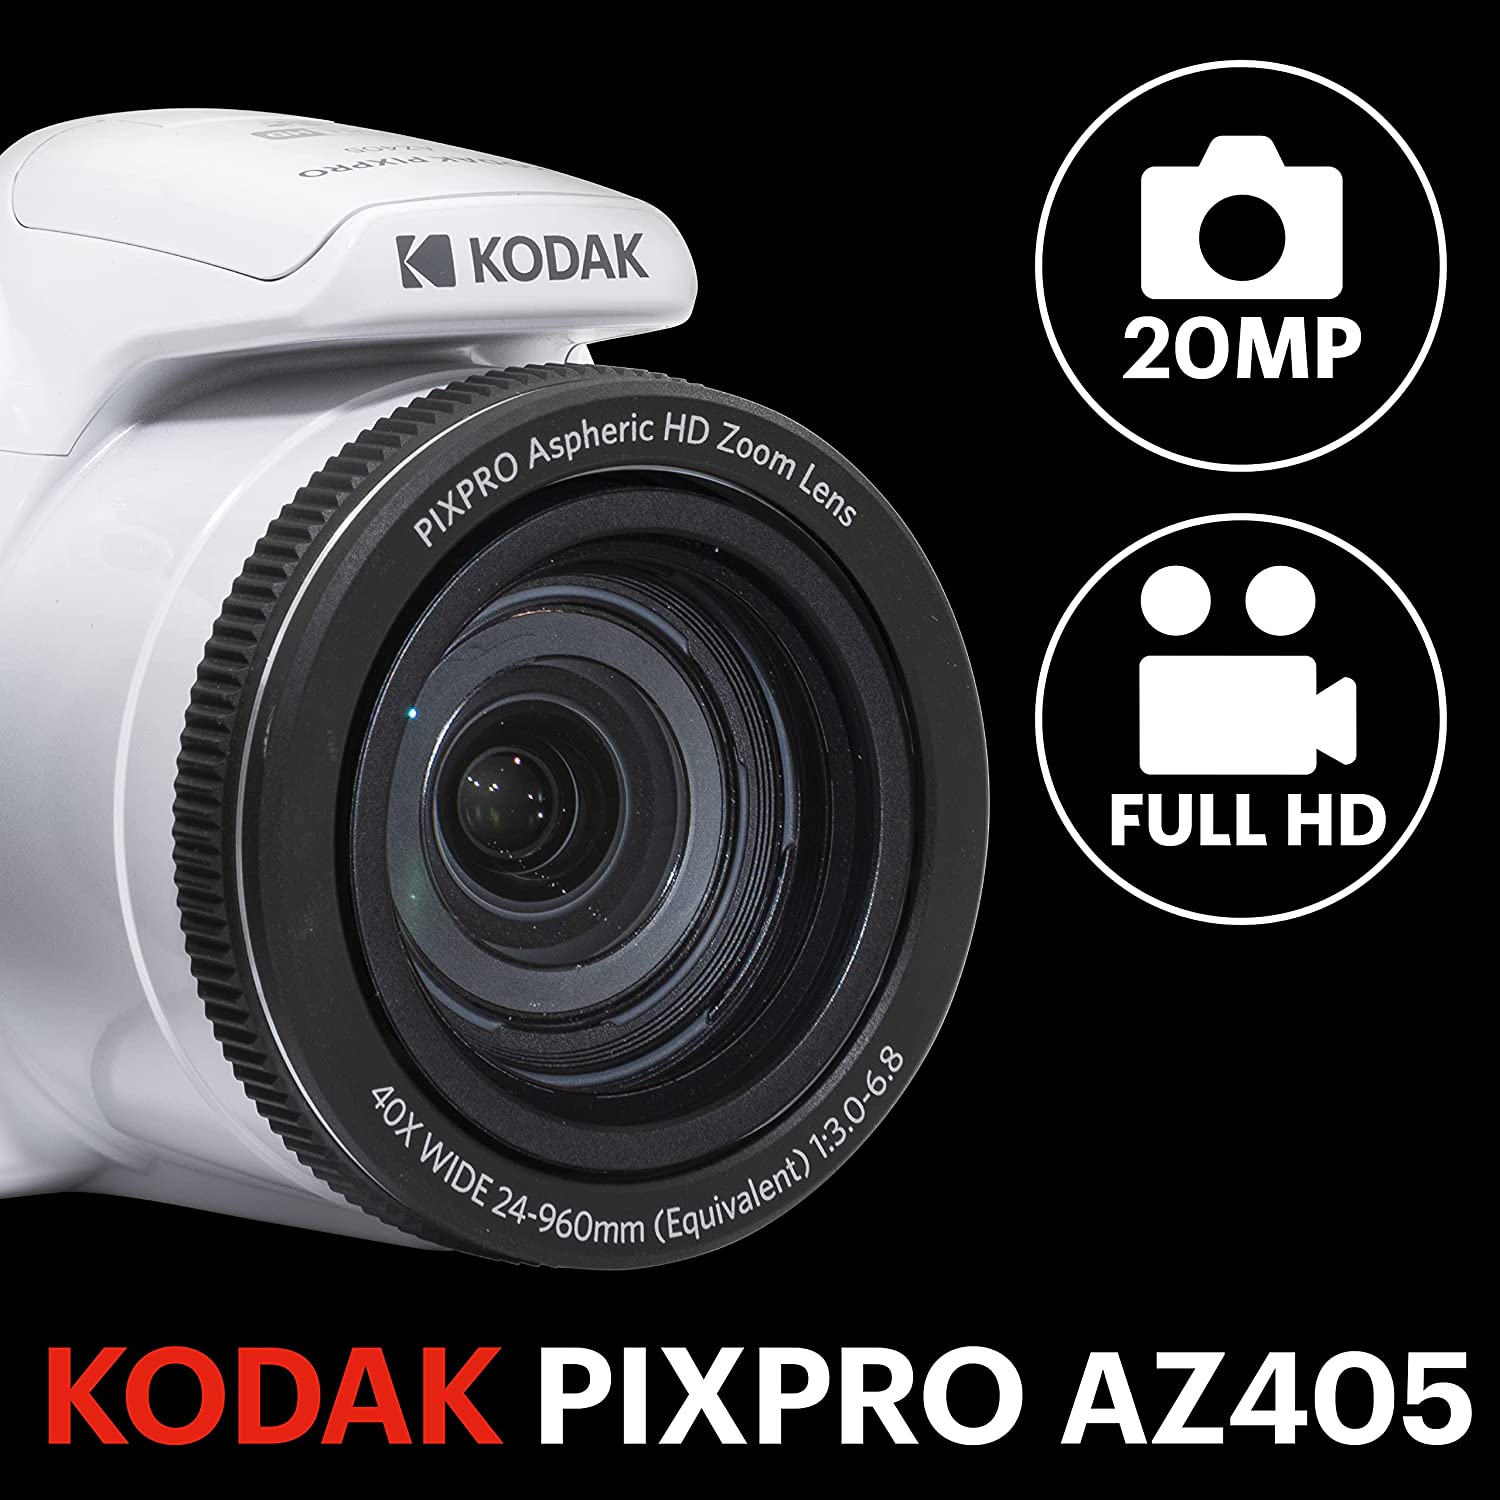 Kodak PIXPRO Astro Zoom AZ421 16 MP Digital Camera - White for